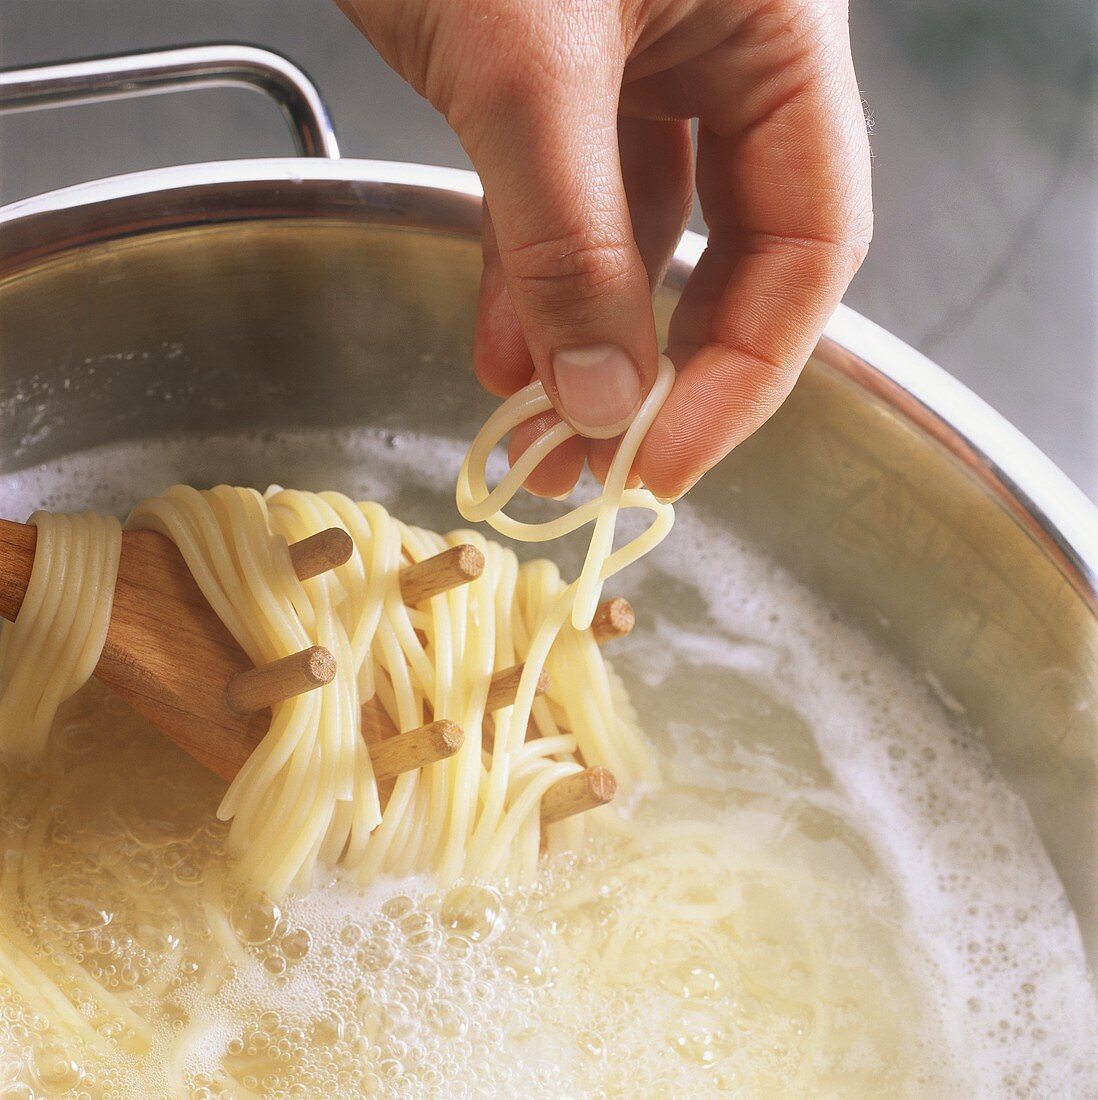 Spaghetti kochen: Hand nimmt Nudel vom Holzlöffel